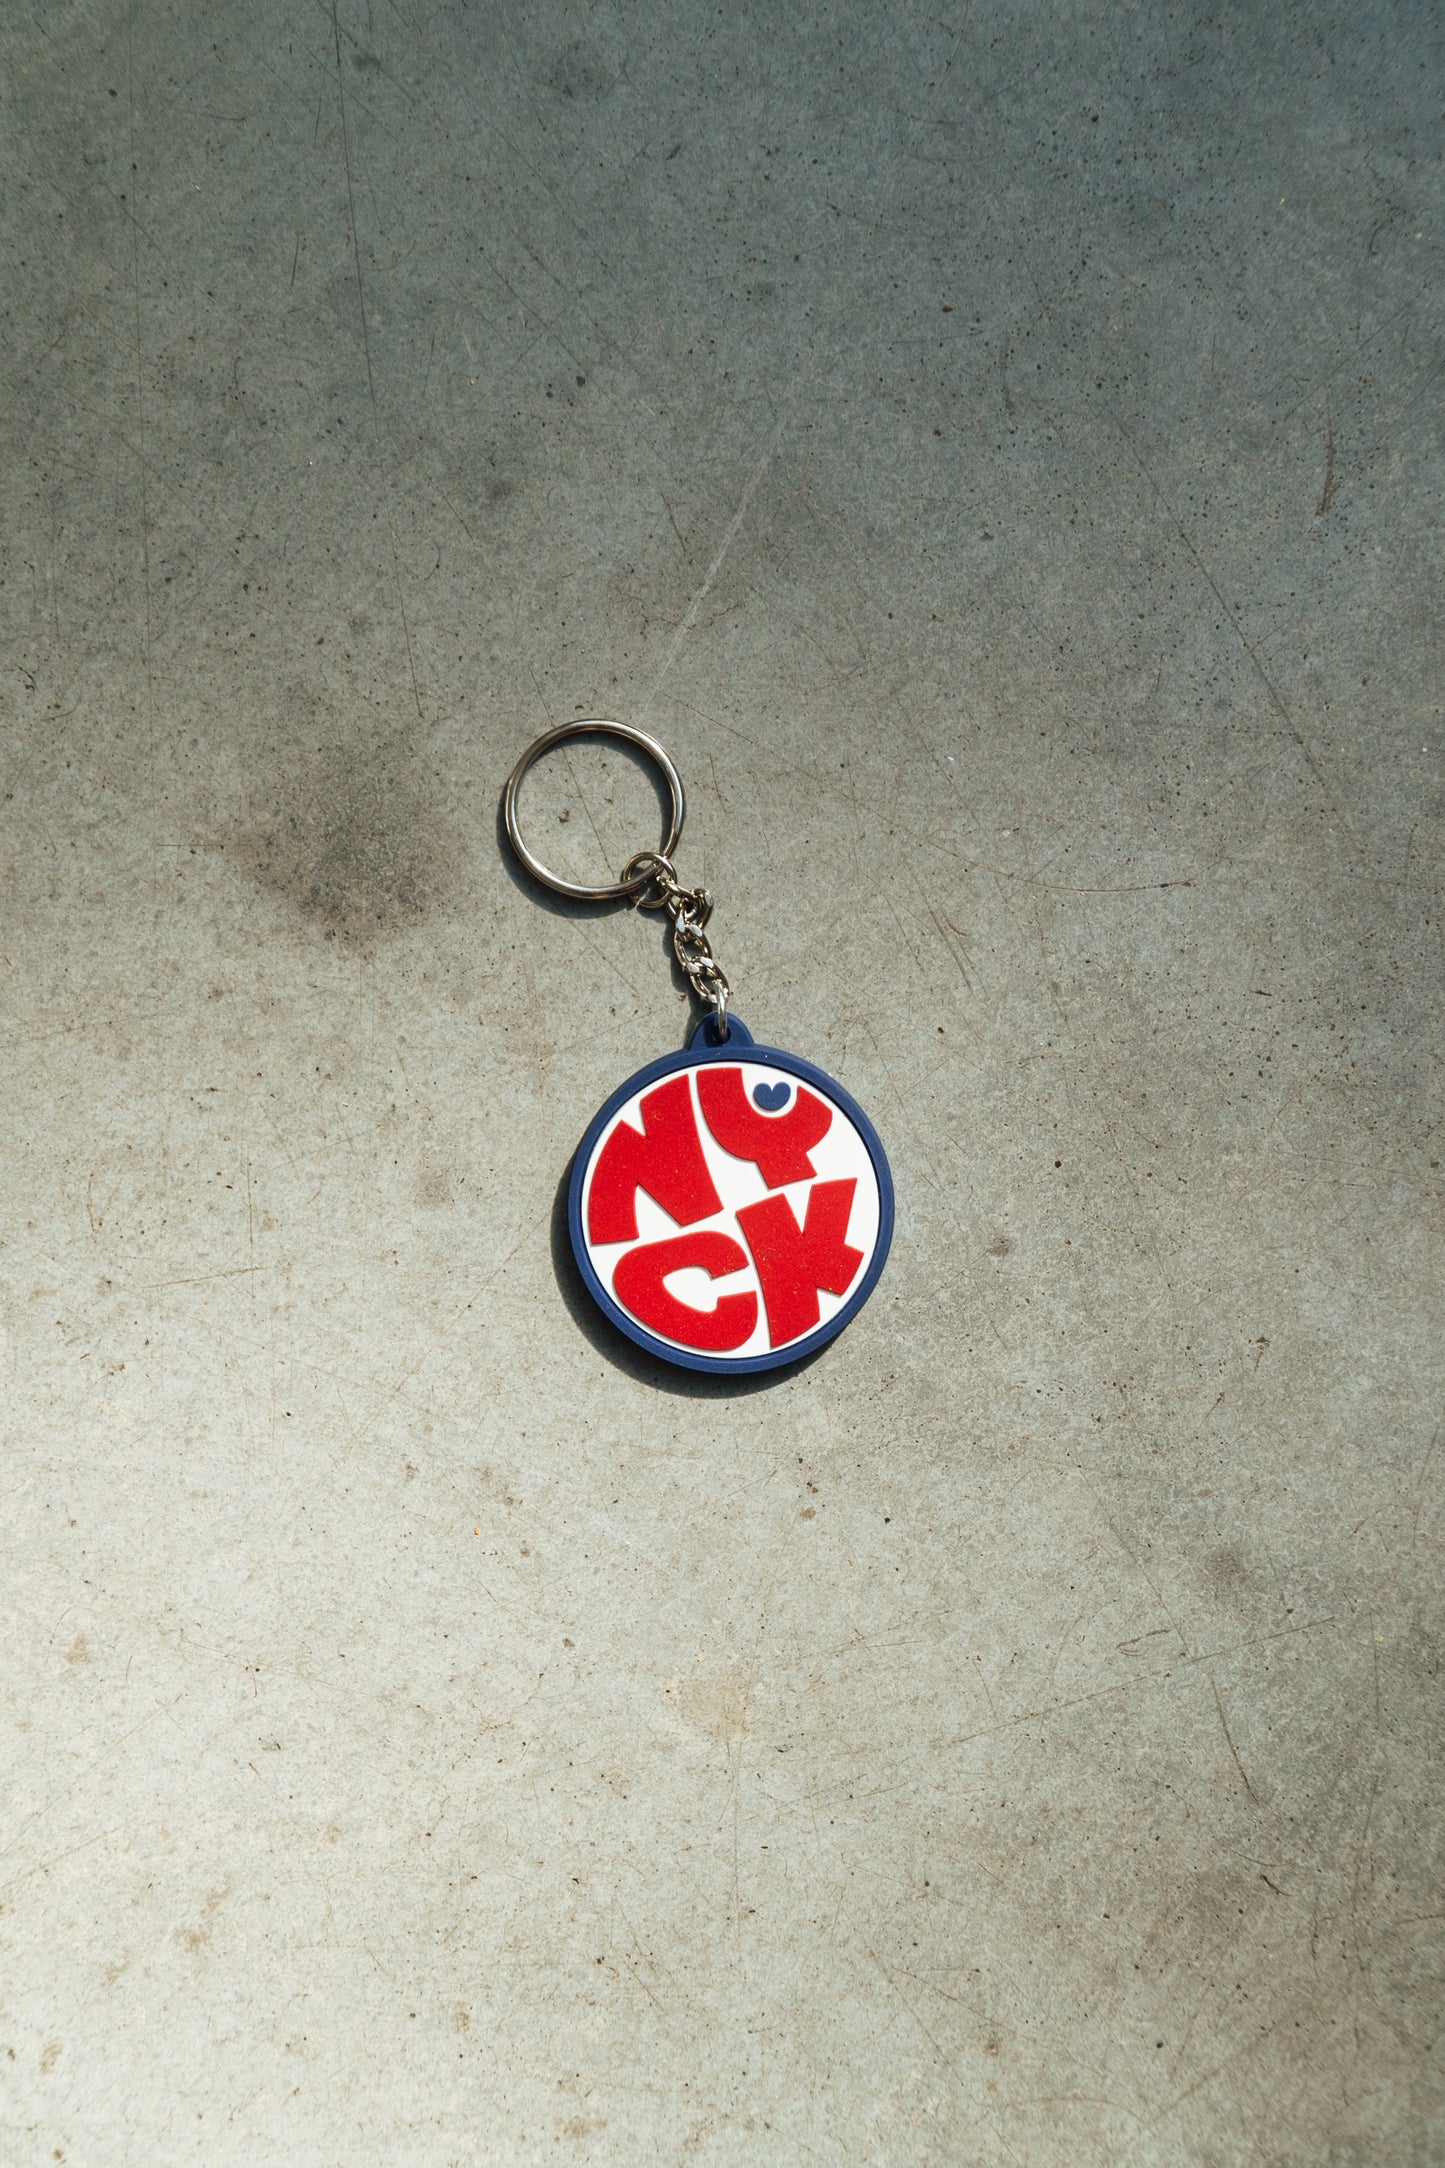 The official NYCK logo key ring